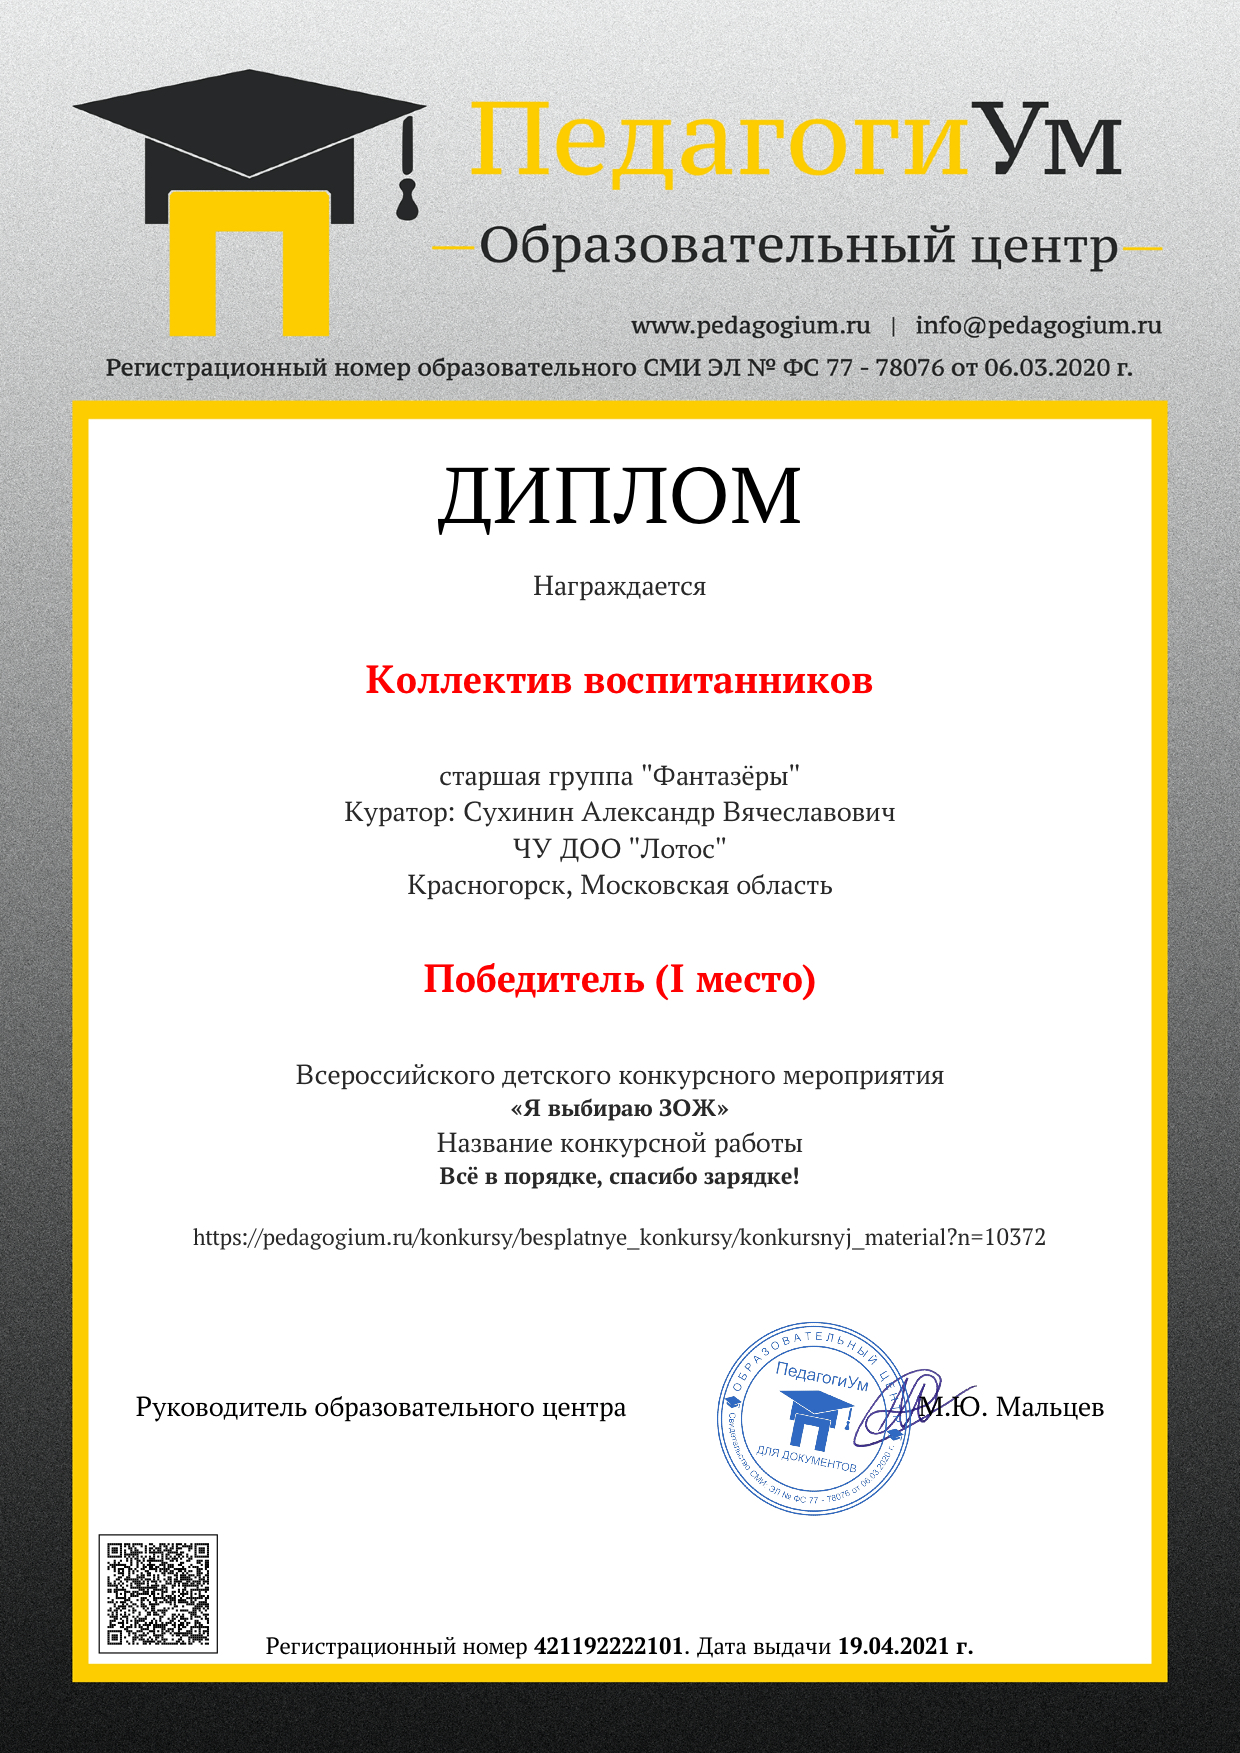 Образец документа воспитаннику-участнику бесплатного детского конкурса центра ПедагогиУм.